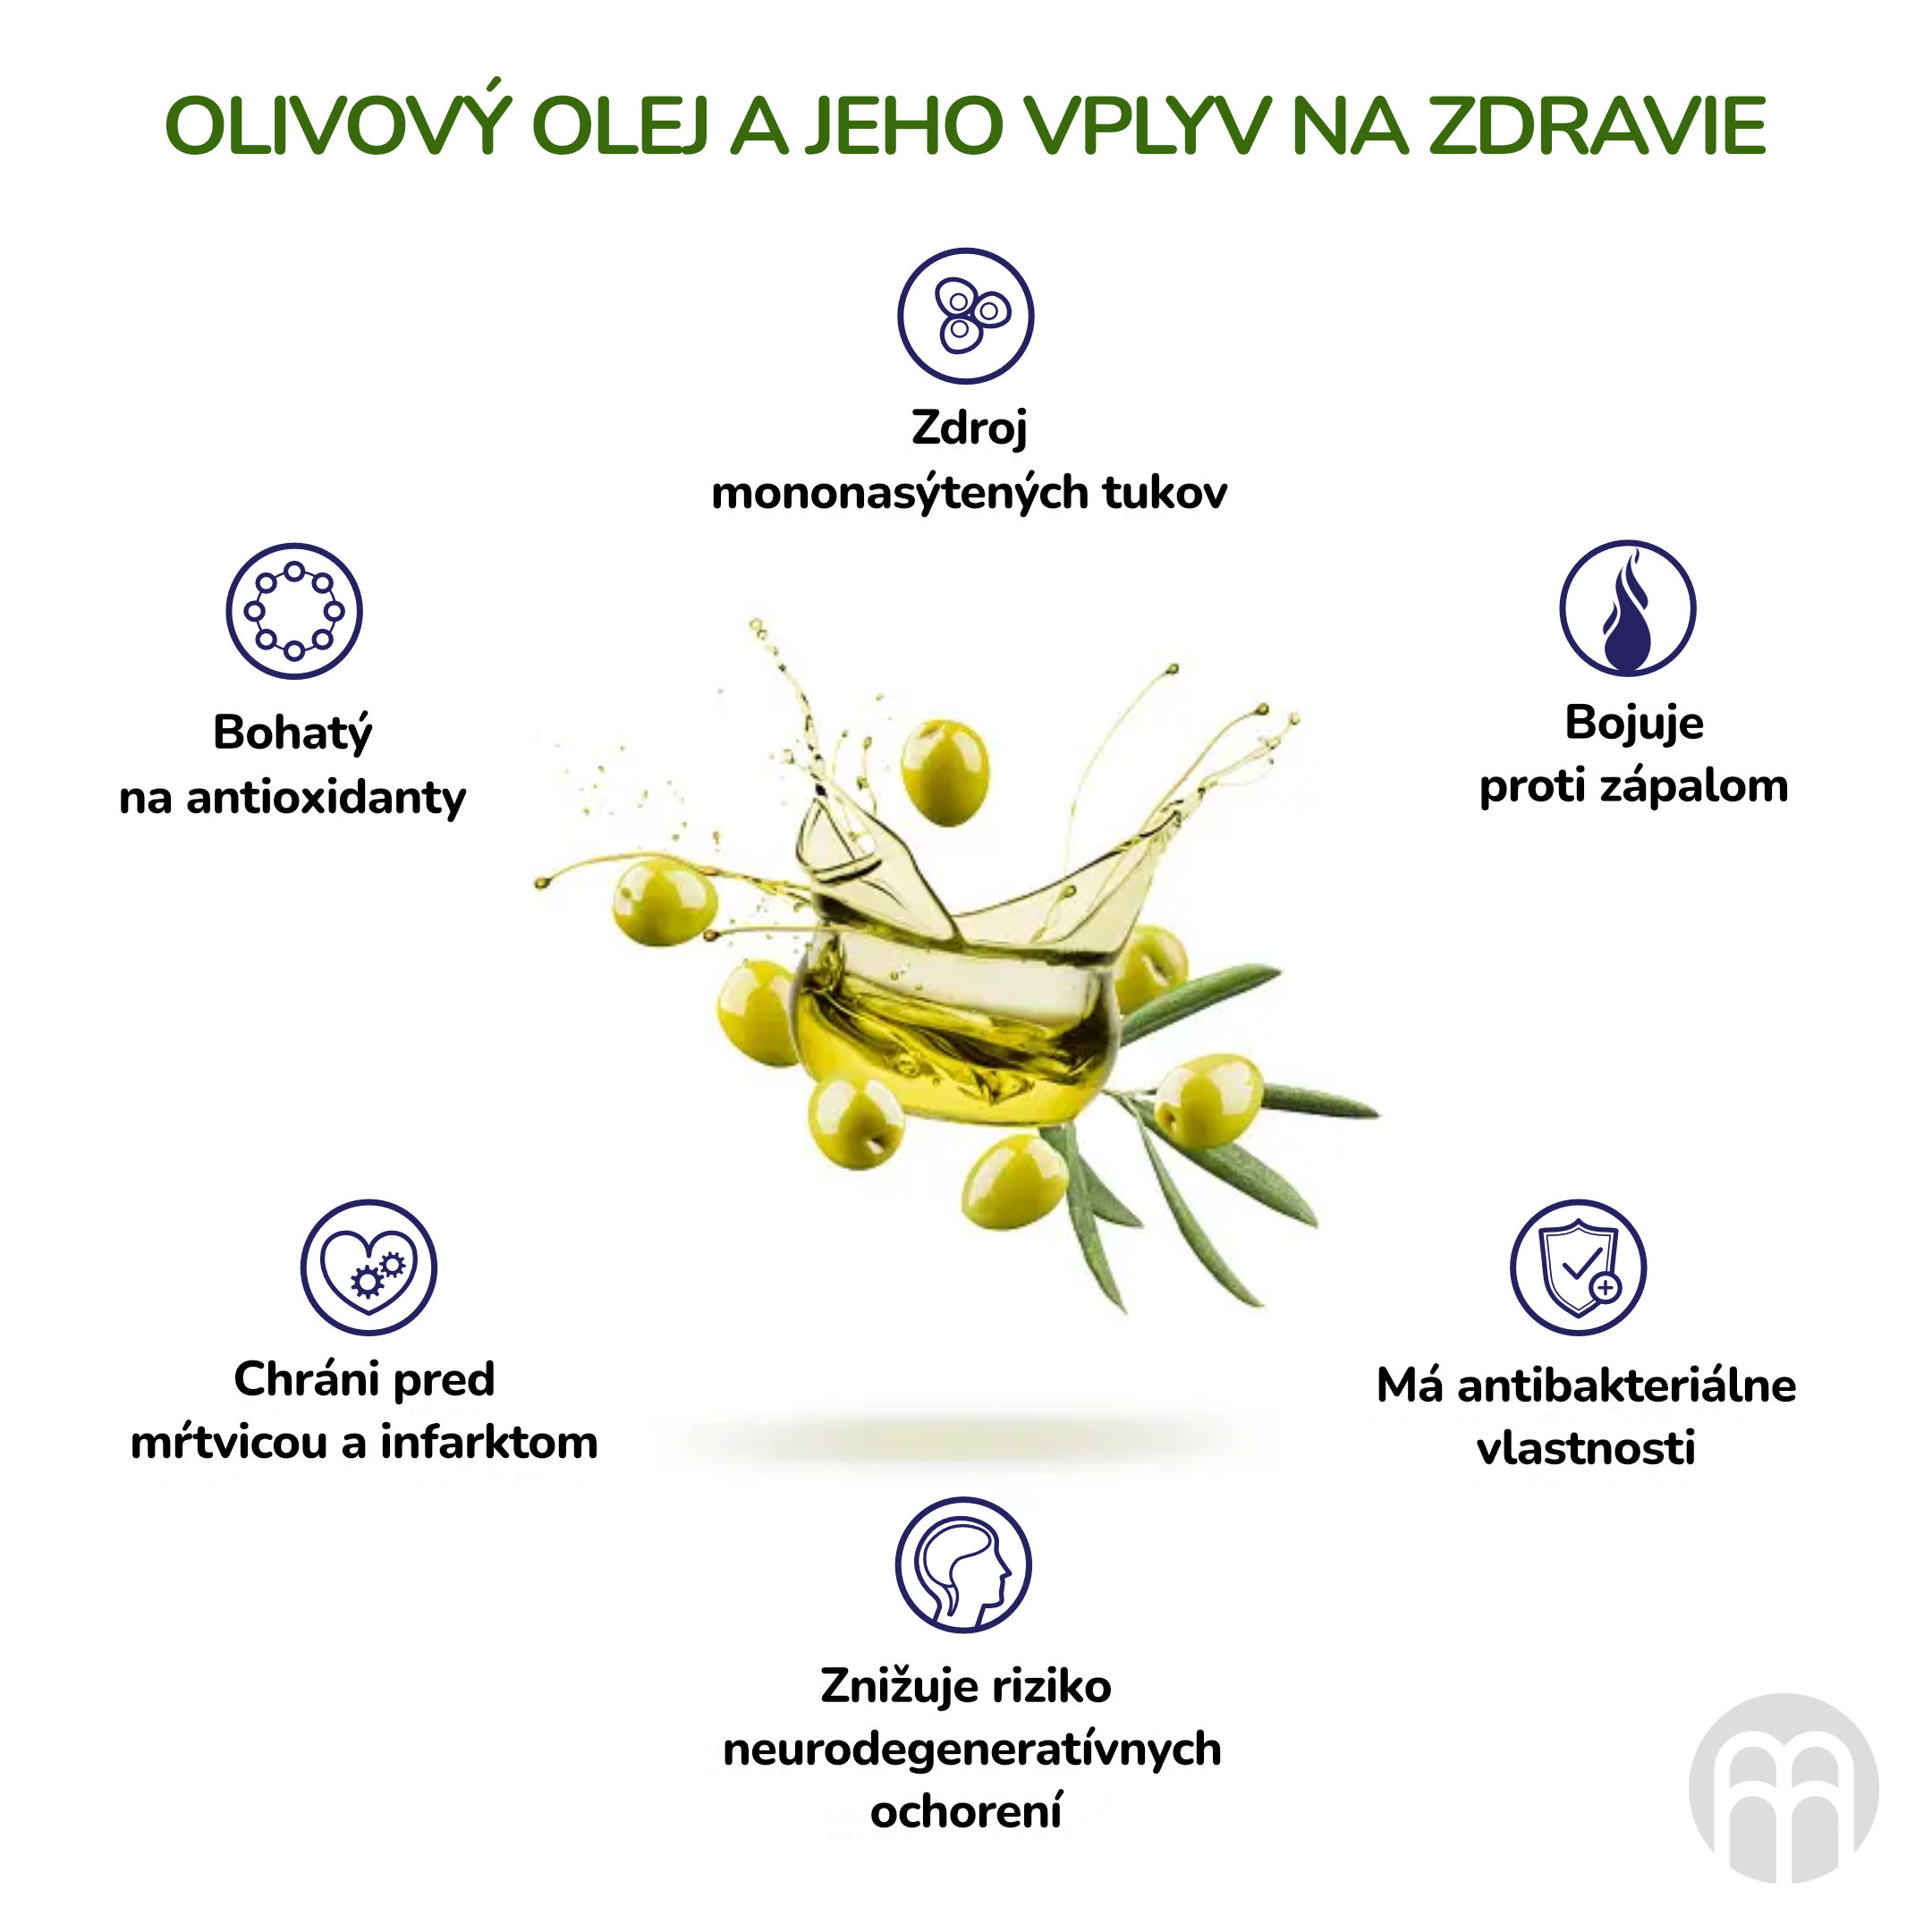 _olivovy olej a jeho vliv na zdravi_infografika_cz